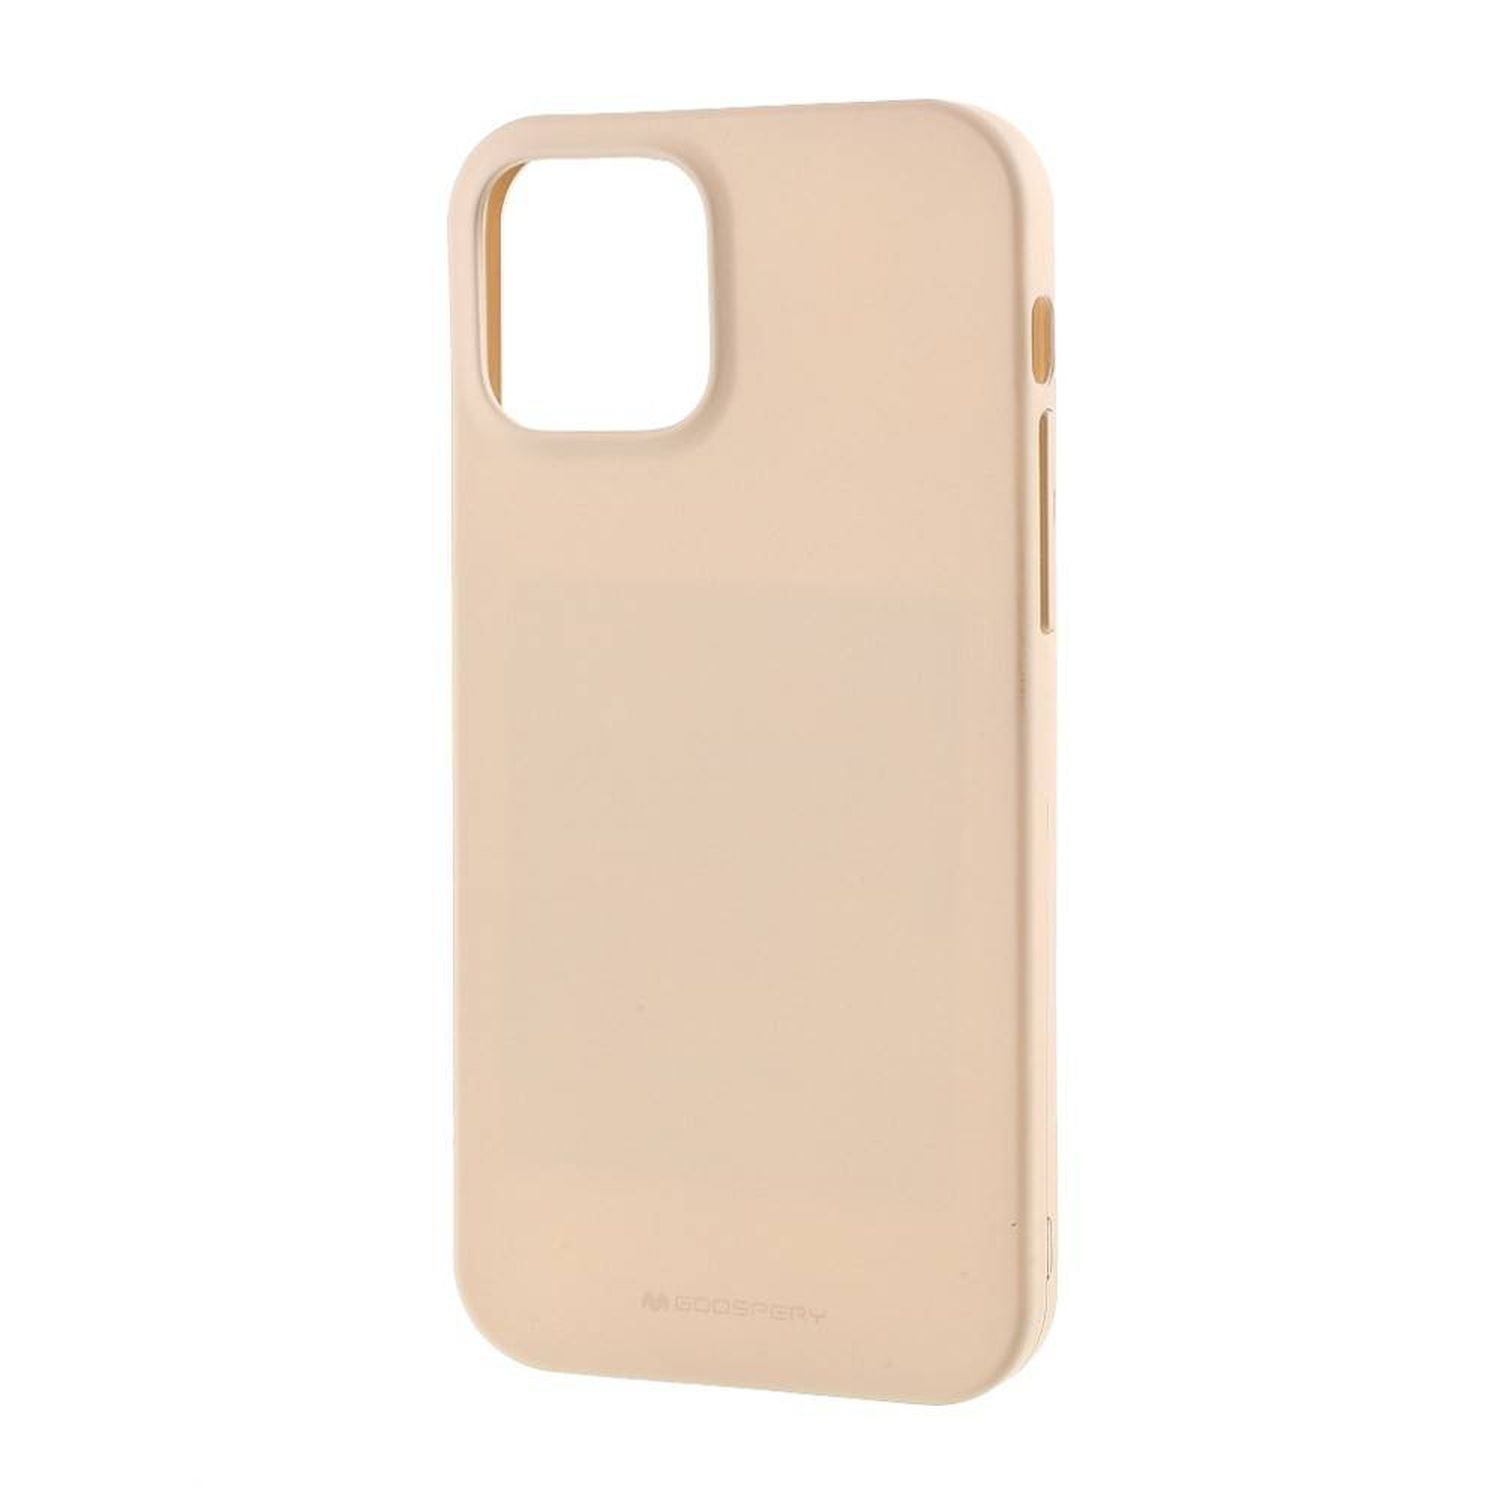 Beige, Jelly Bumper 12 cofi1453® Beige Bumper, 12, mit Apple, iPhone iPhone Schutzhülle Case in kompatibel Handyhülle Case Soft COFI